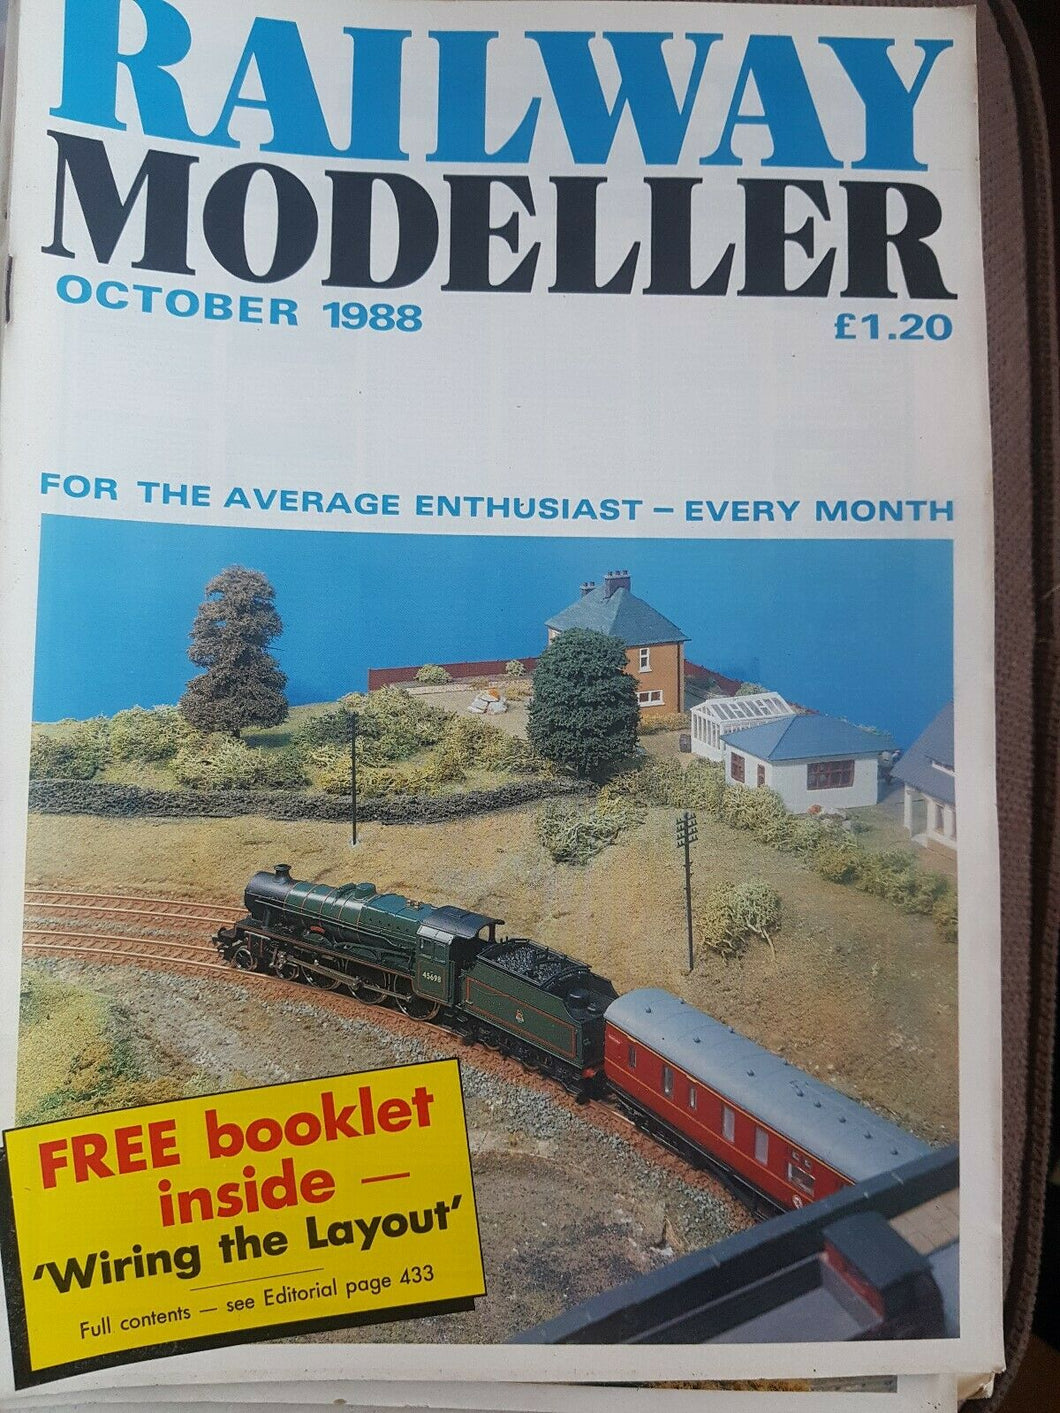 Railway modeller magazine October 1988